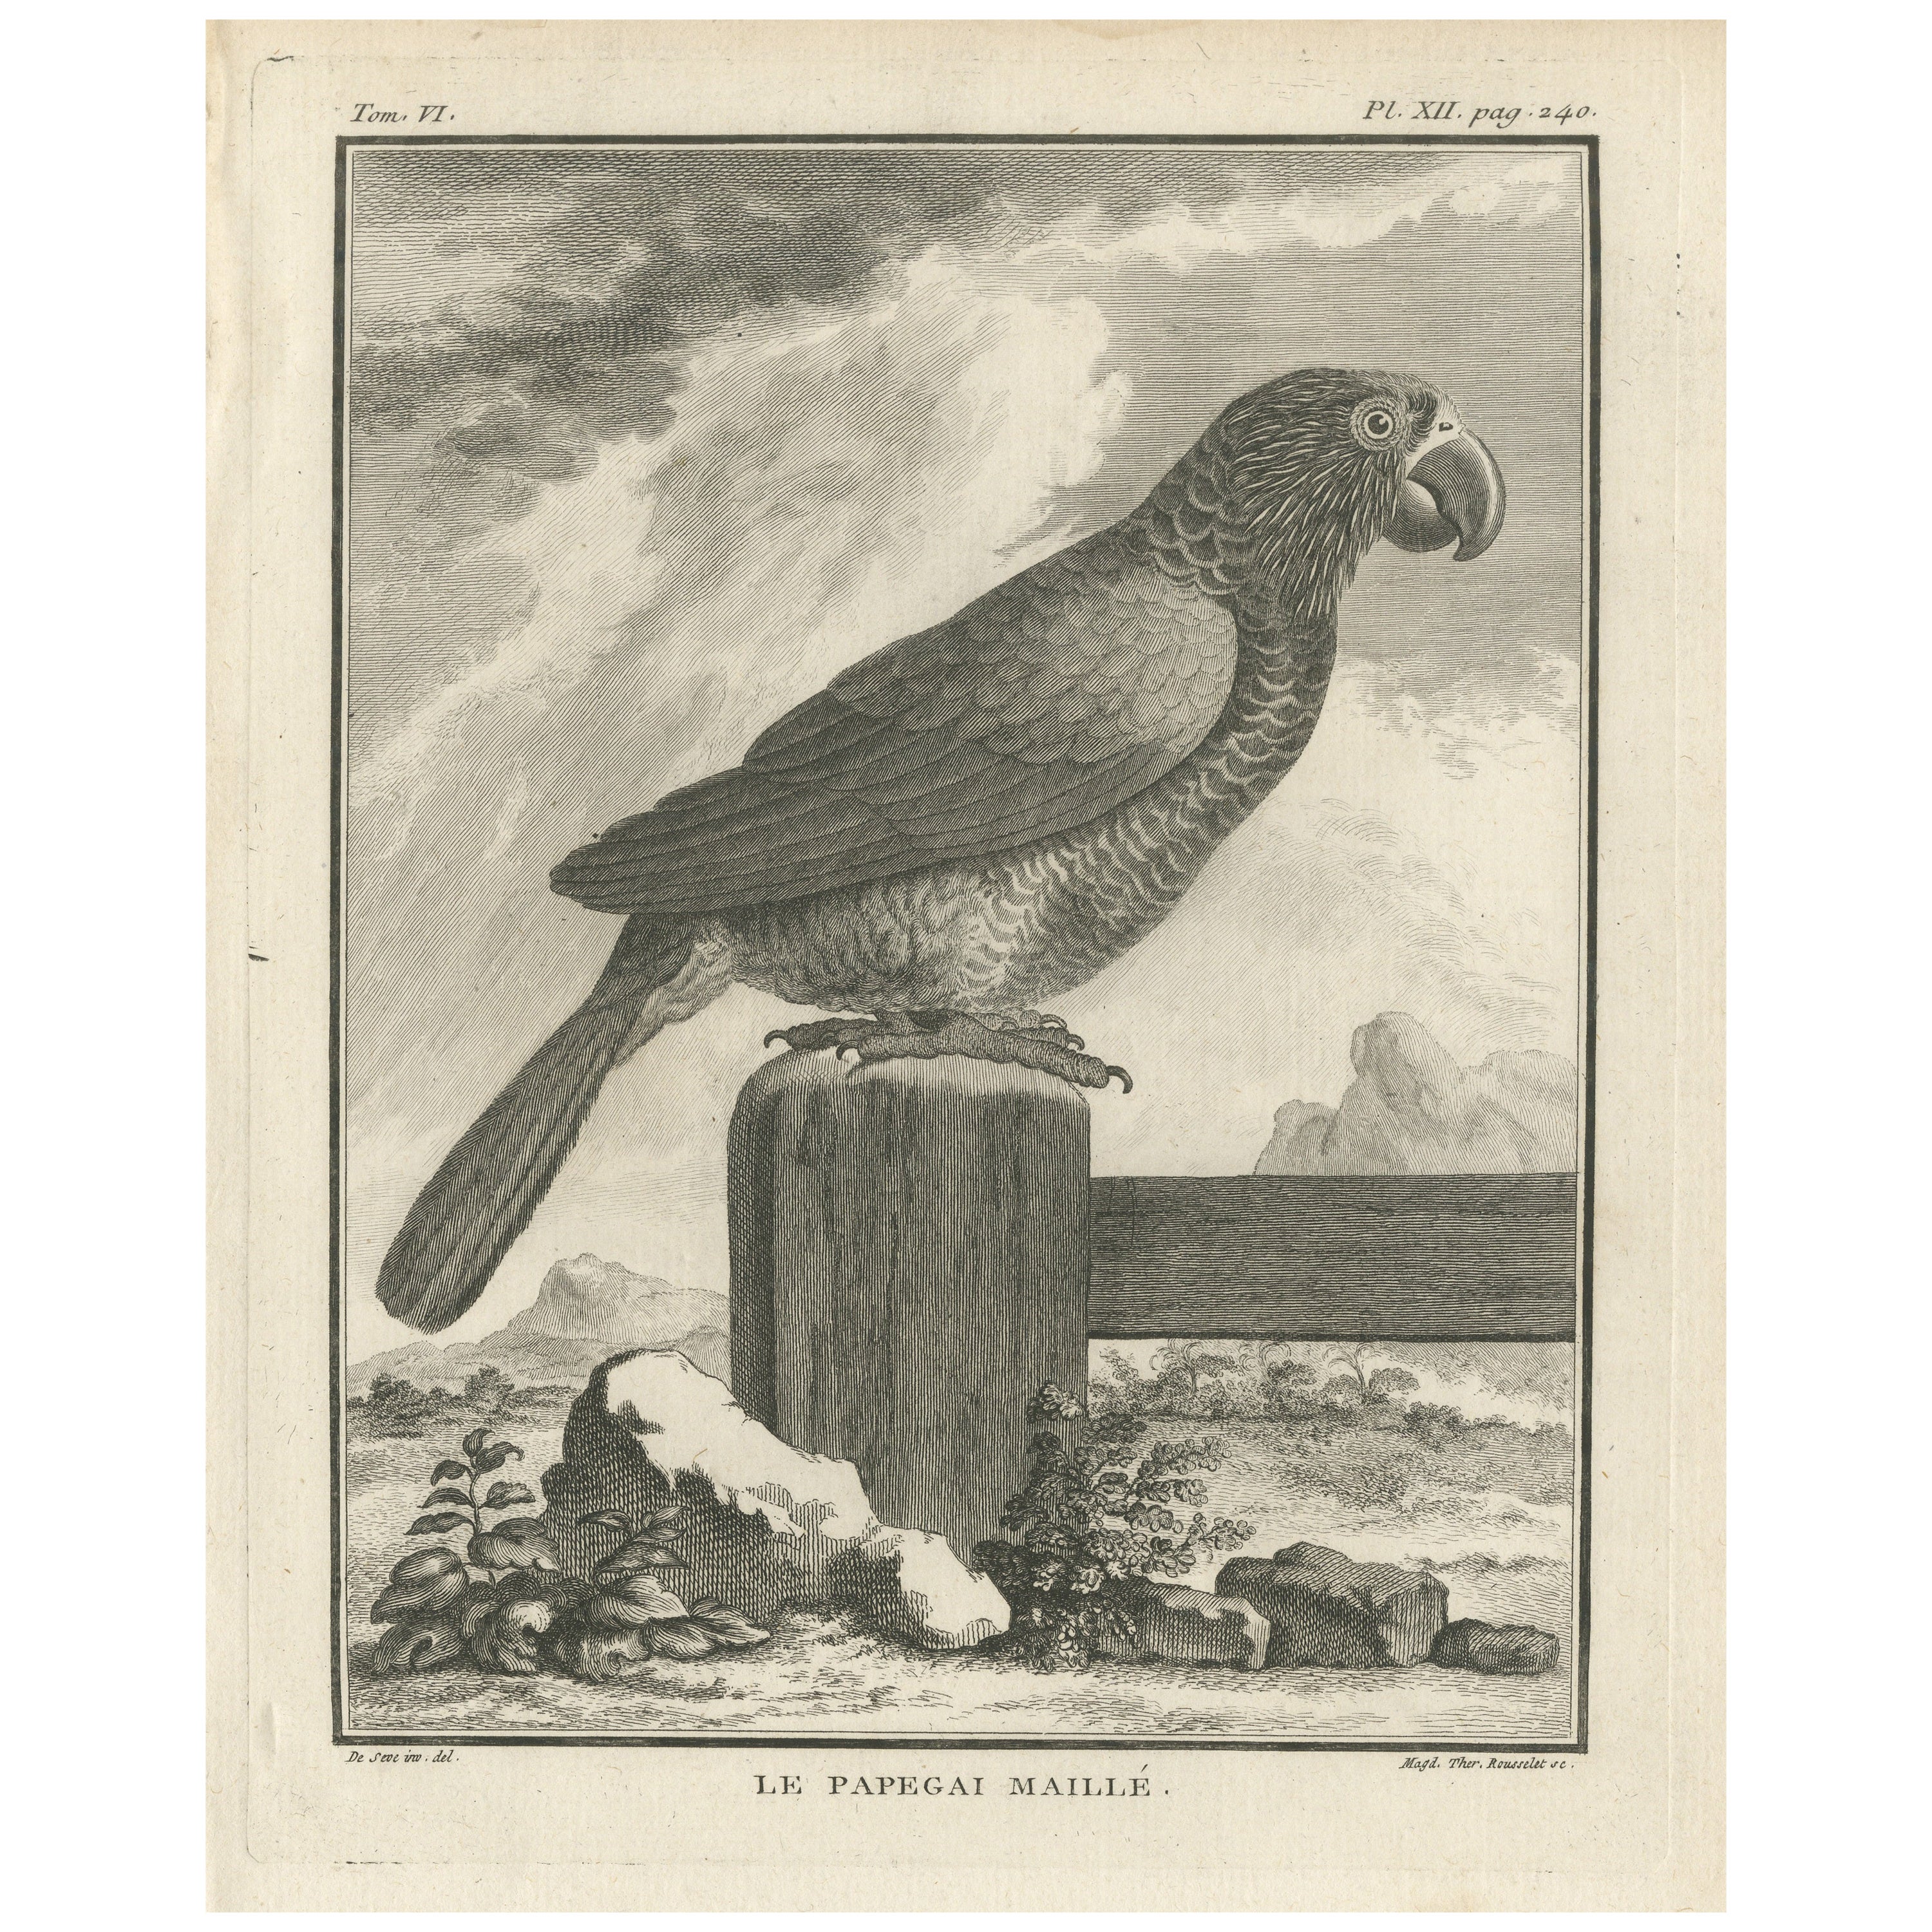 Original Antique Bird Engraving of a Gridded Parrot For Sale